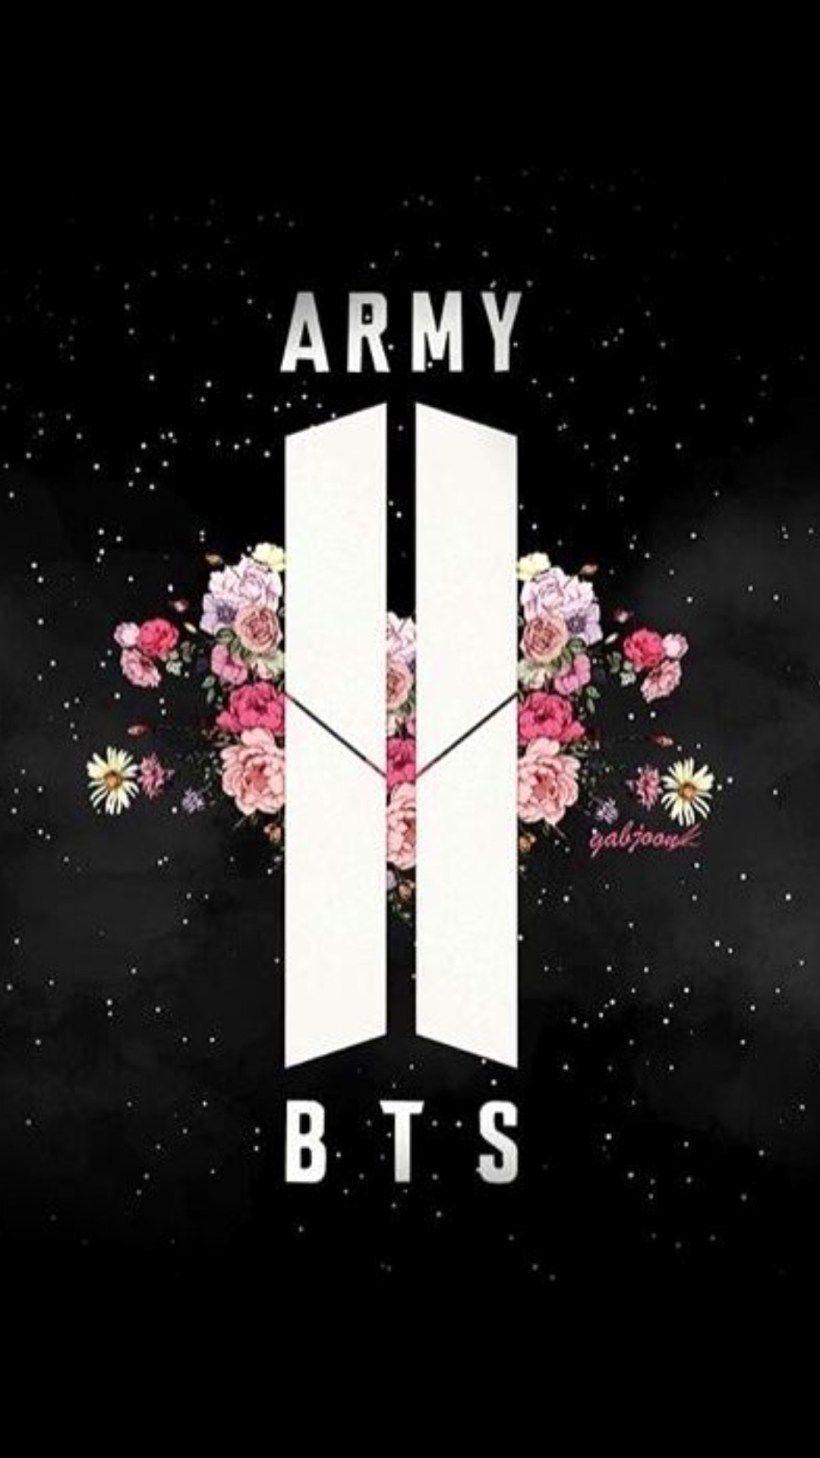 BTS Army Wallpaper. Bts wallpaper, Army